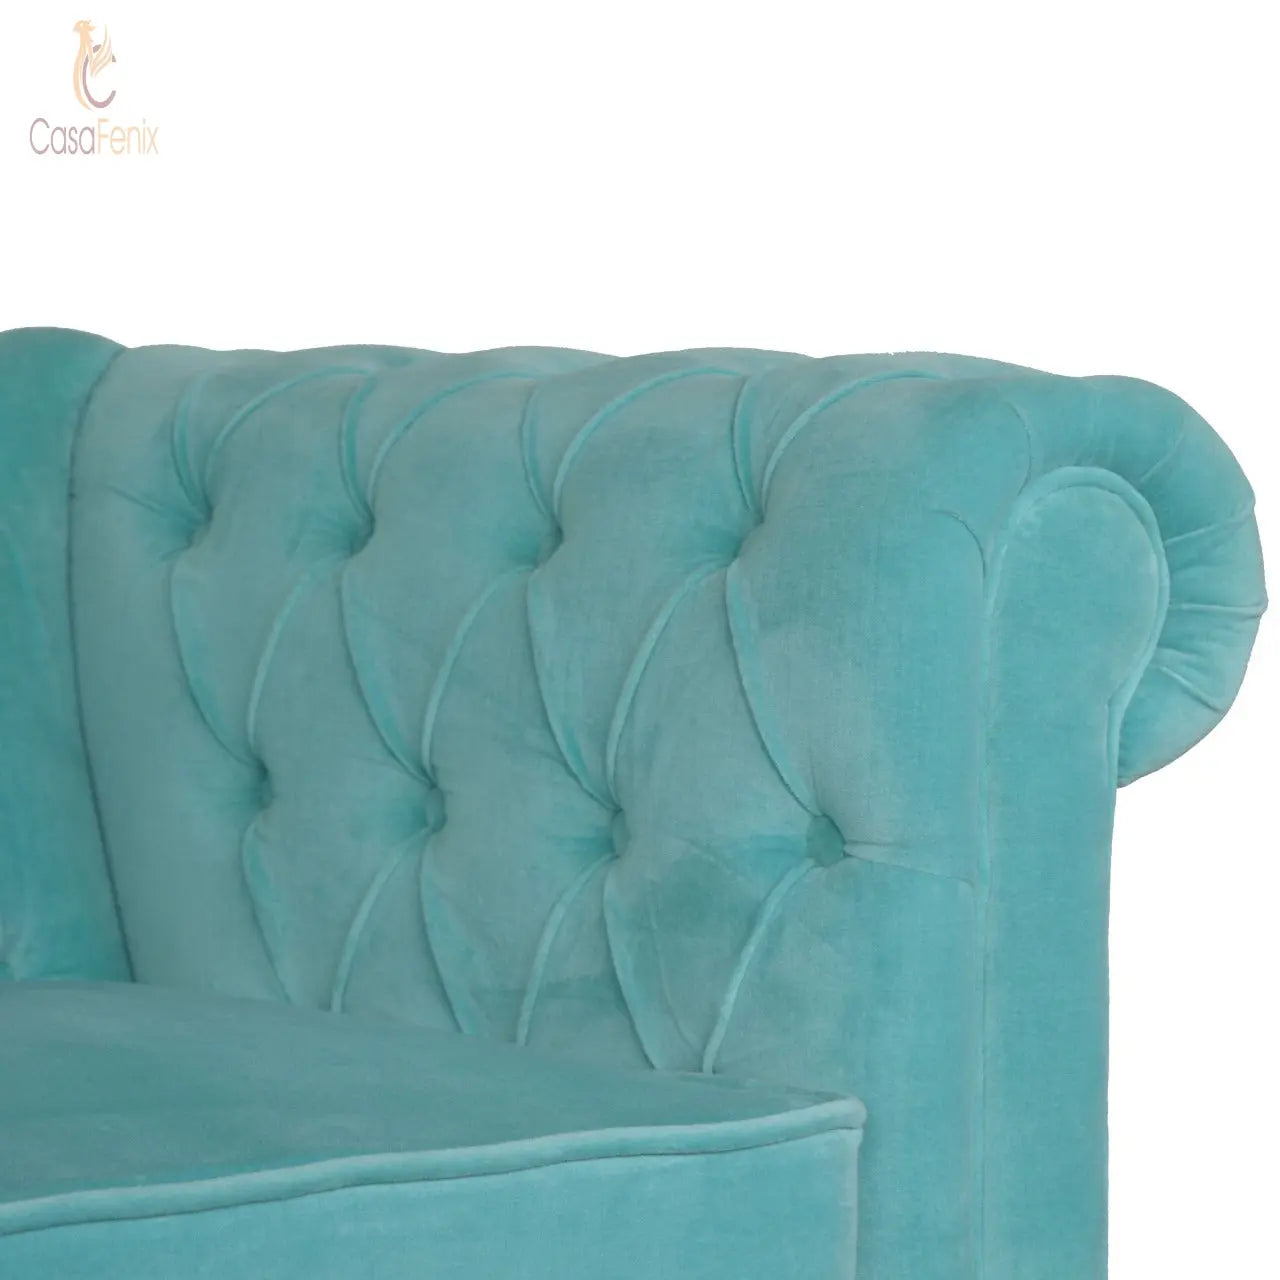 Aqua Velvet 2 Seat Chesterfield Sofa - CasaFenix